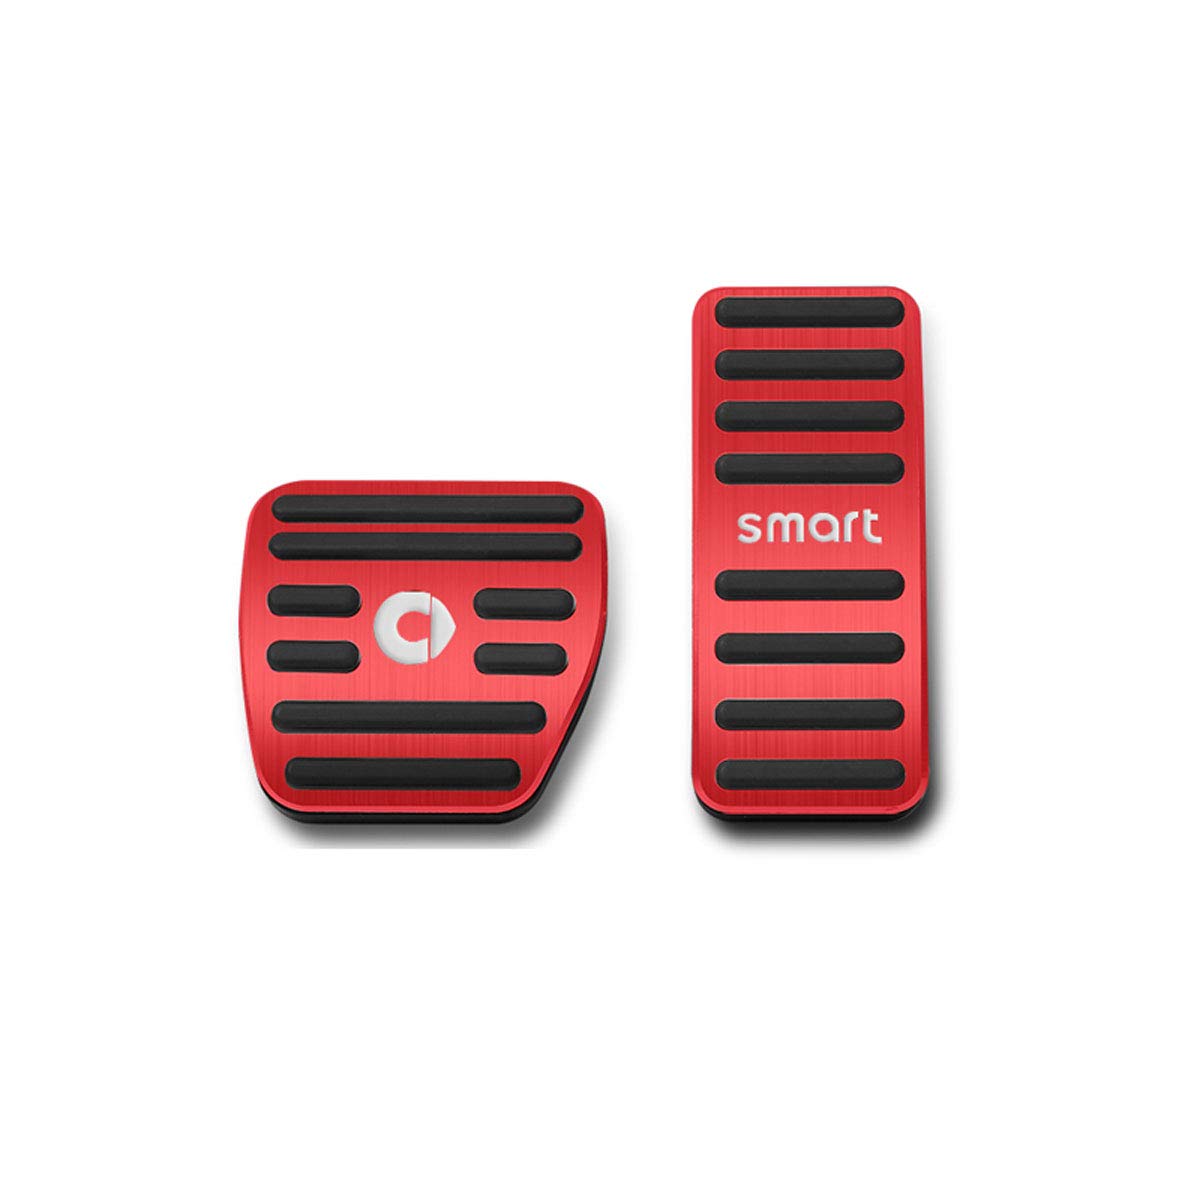 SHIFENG Bremspedalabdeckung für Smart 453 Fortwo Forfour (rot, Smart-Logo) von SHIFENG